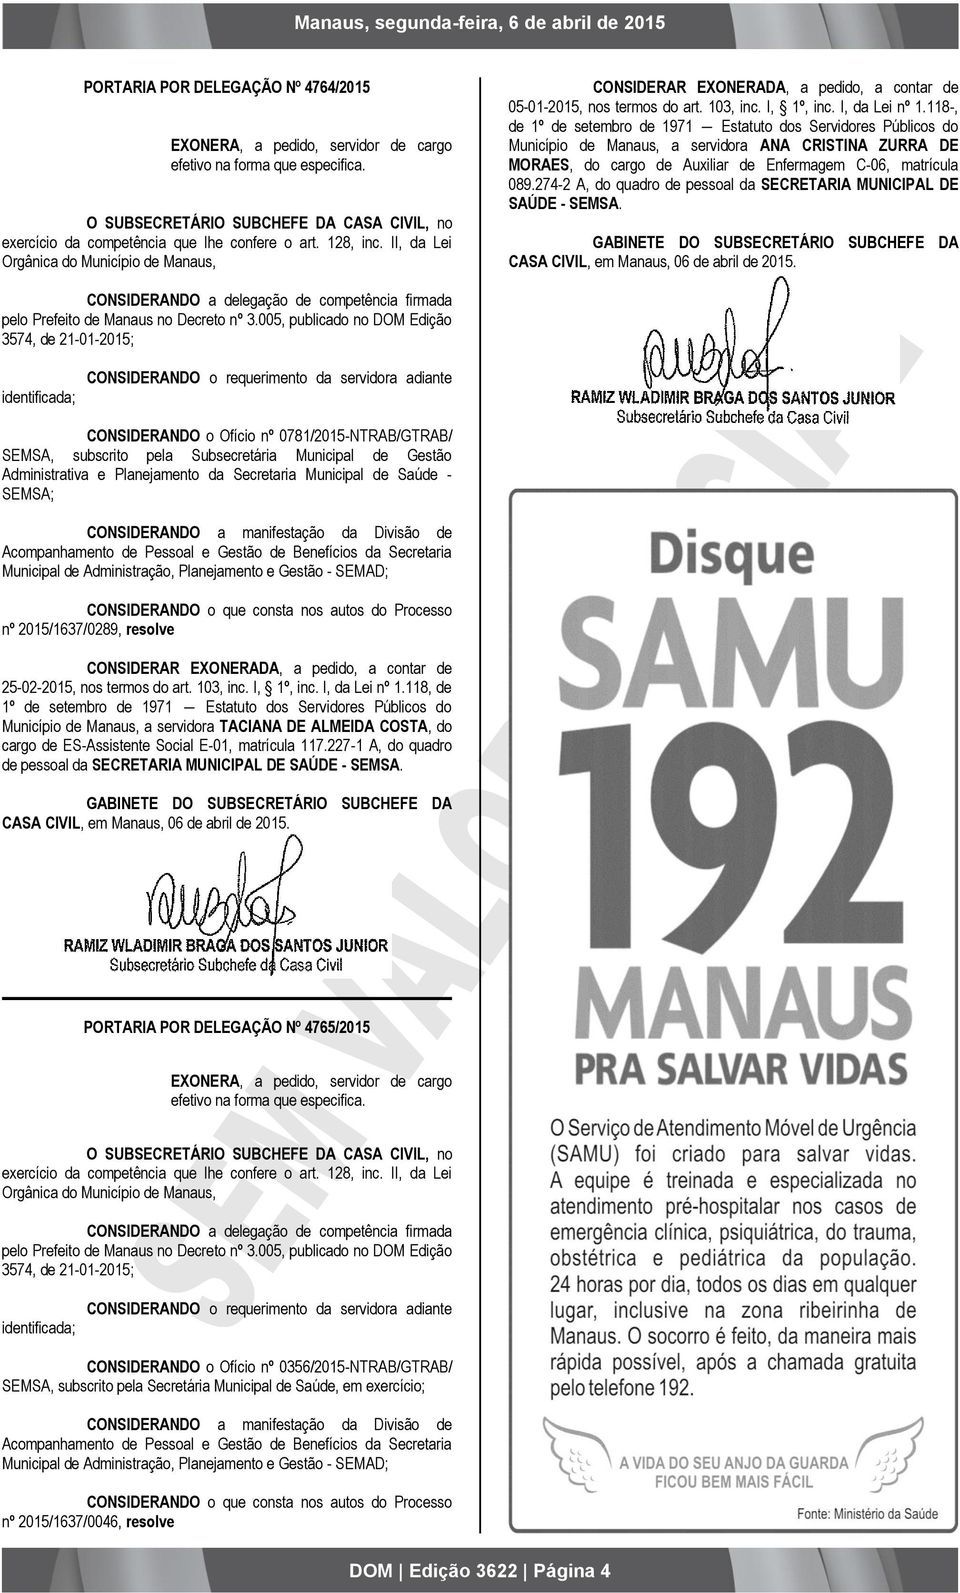 118-, de 1º de setembro de 1971 Estatuto dos Servidores Públicos do Município de Manaus, a servidora ANA CRISTINA ZURRA DE MORAES, do cargo de Auxiliar de Enfermagem C-06, matrícula 089.